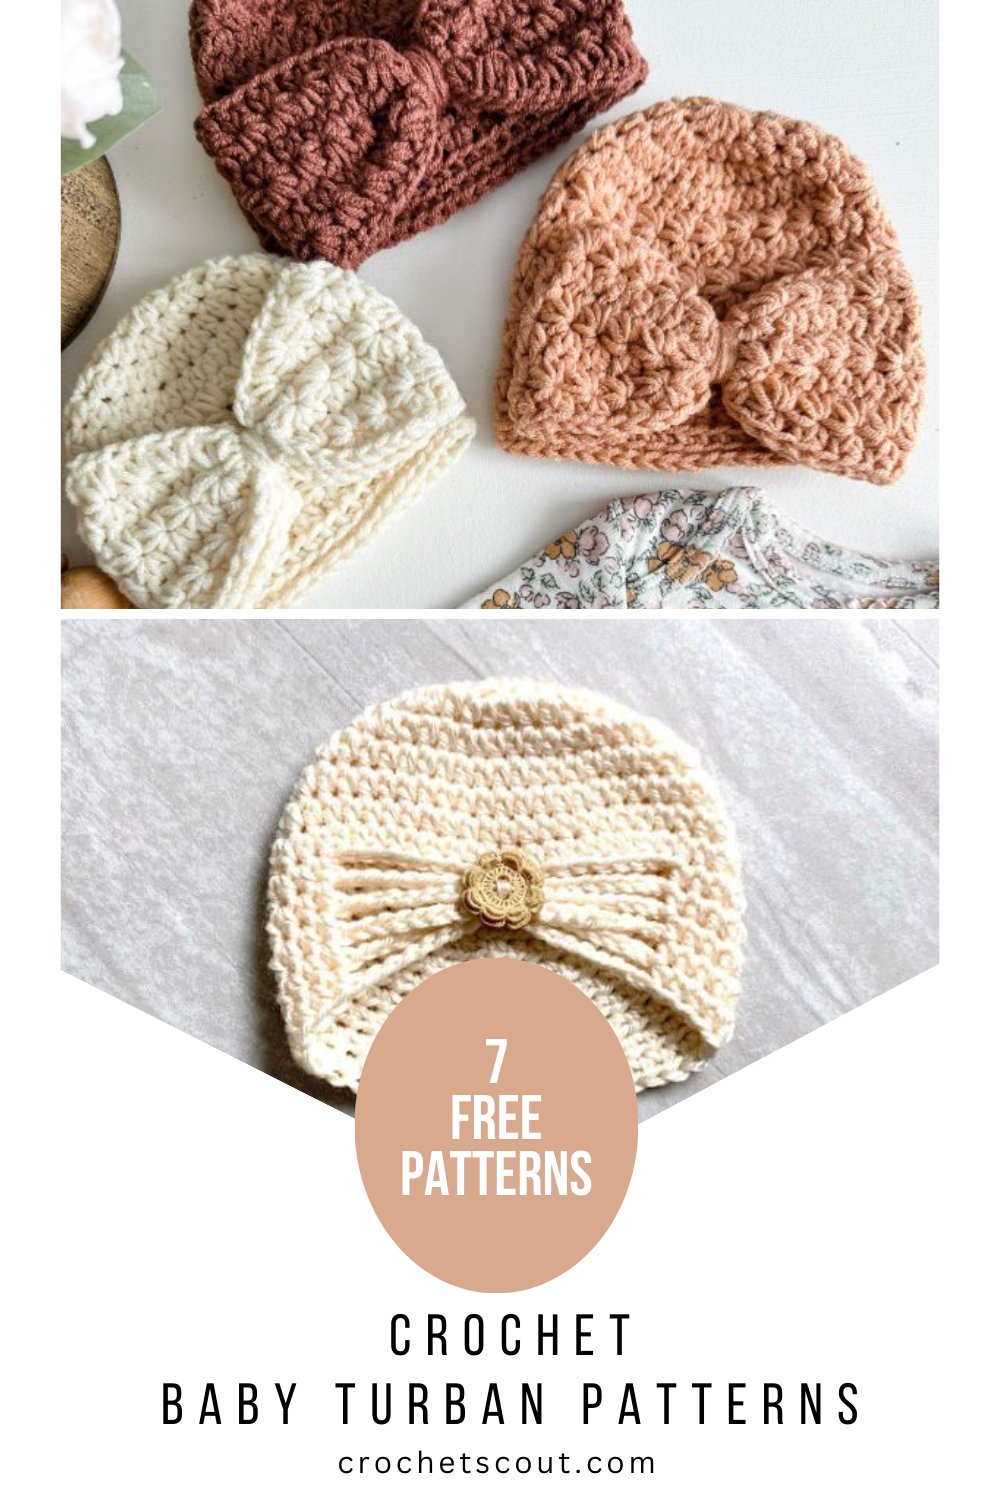 Cute Crochet Baby Turbans: 7 Free Patterns